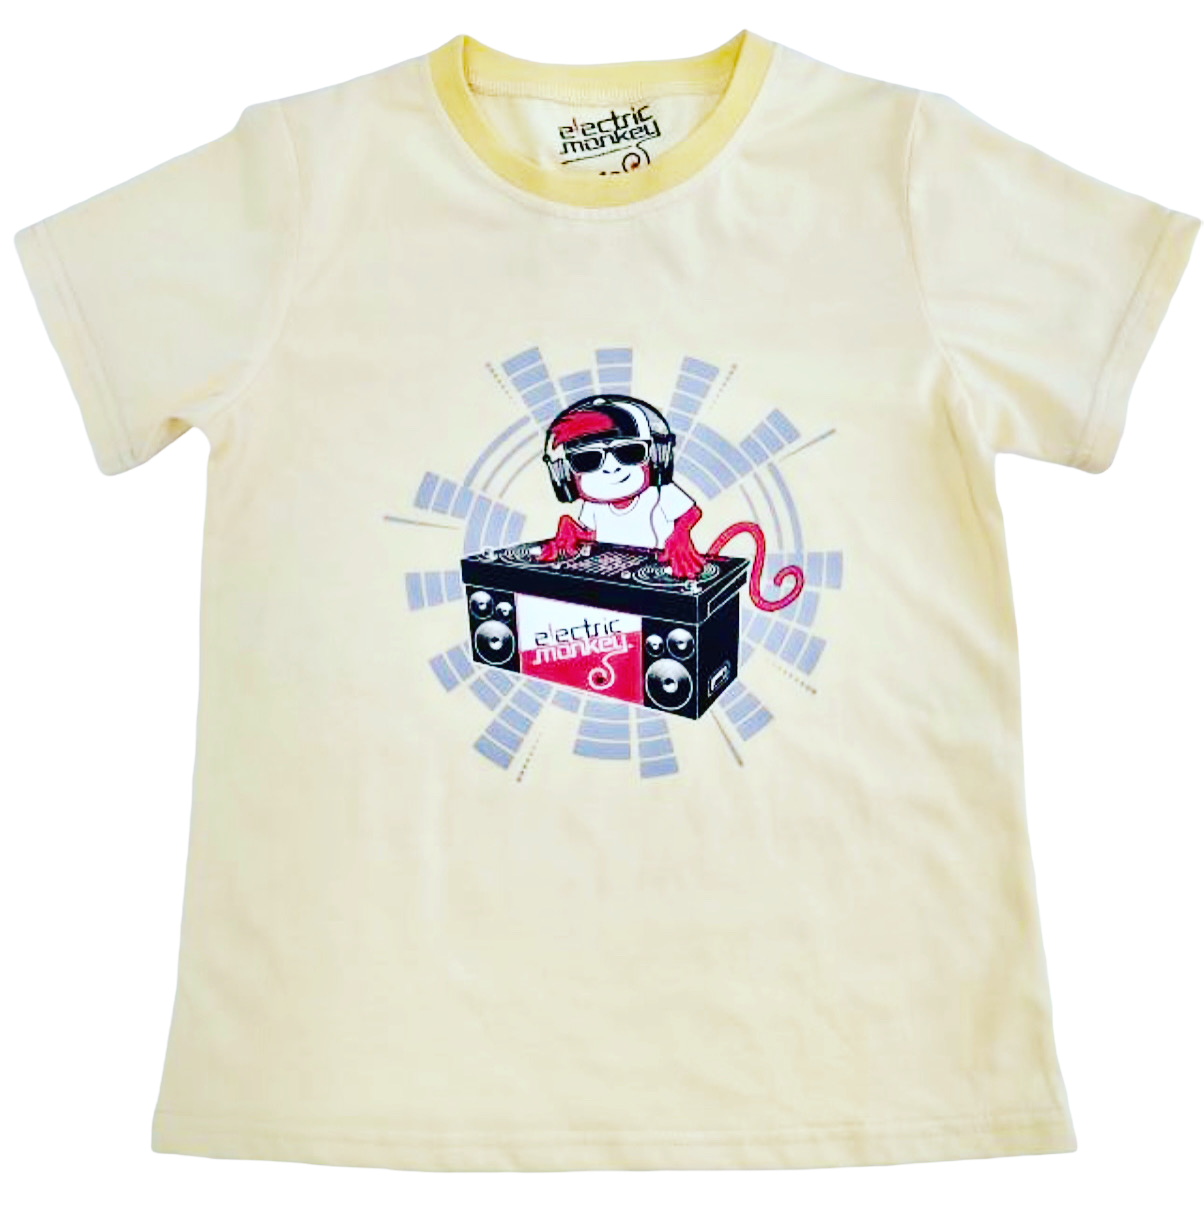 DJ Electric Monkey Soft Kids Tee Shirt- Yellow